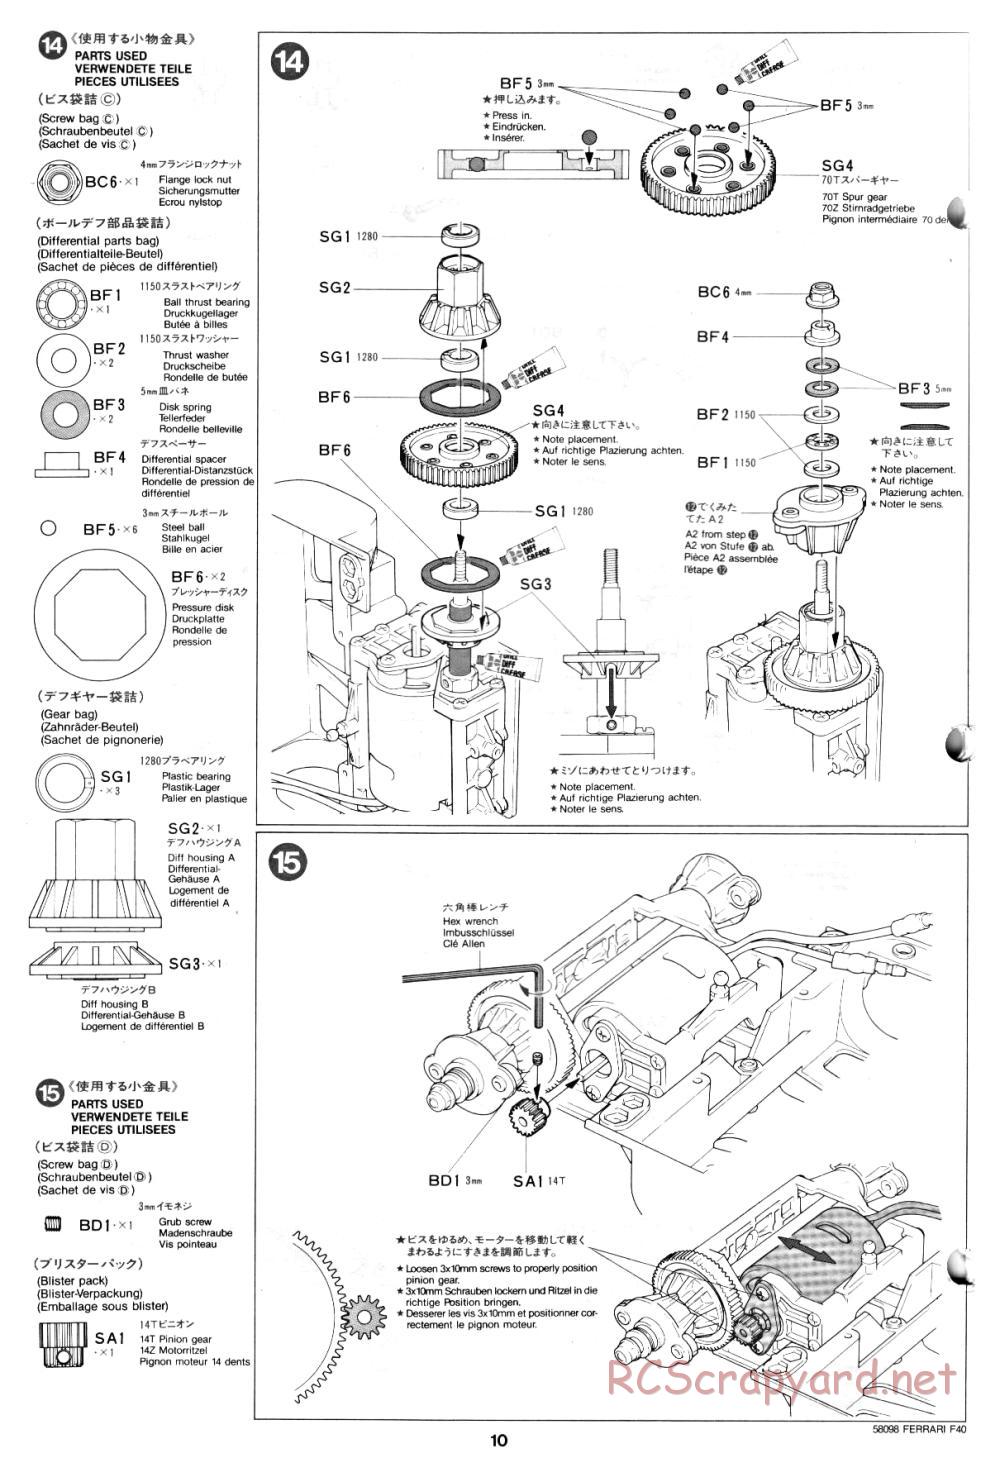 Tamiya - Ferrari F40 - 58098 - Manual - Page 10